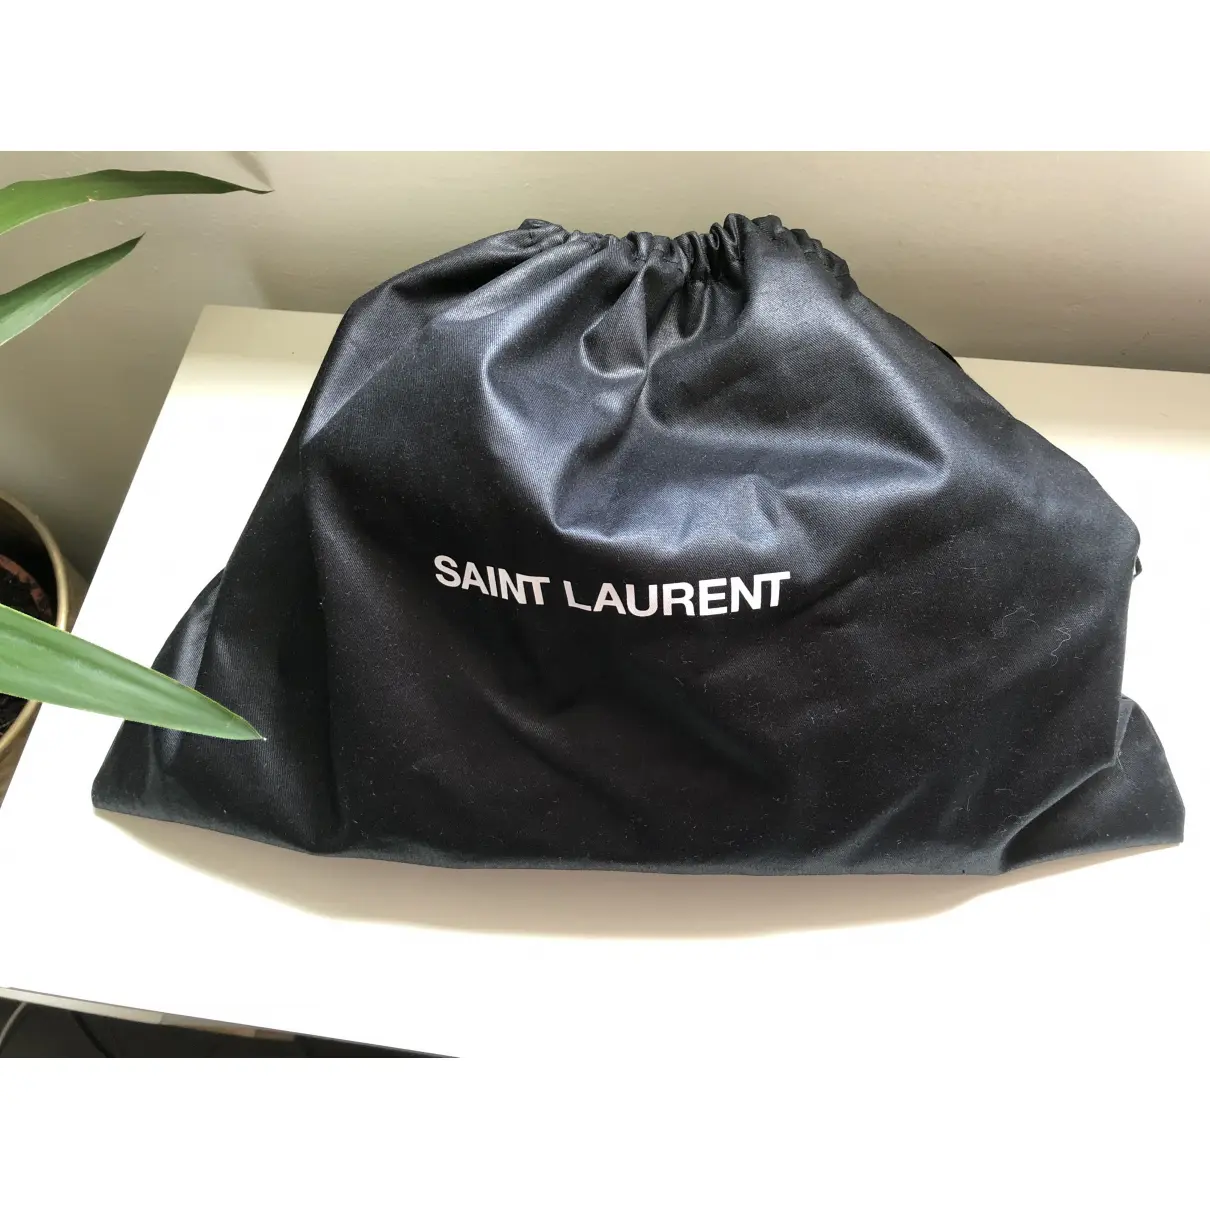 Cloth bag Saint Laurent